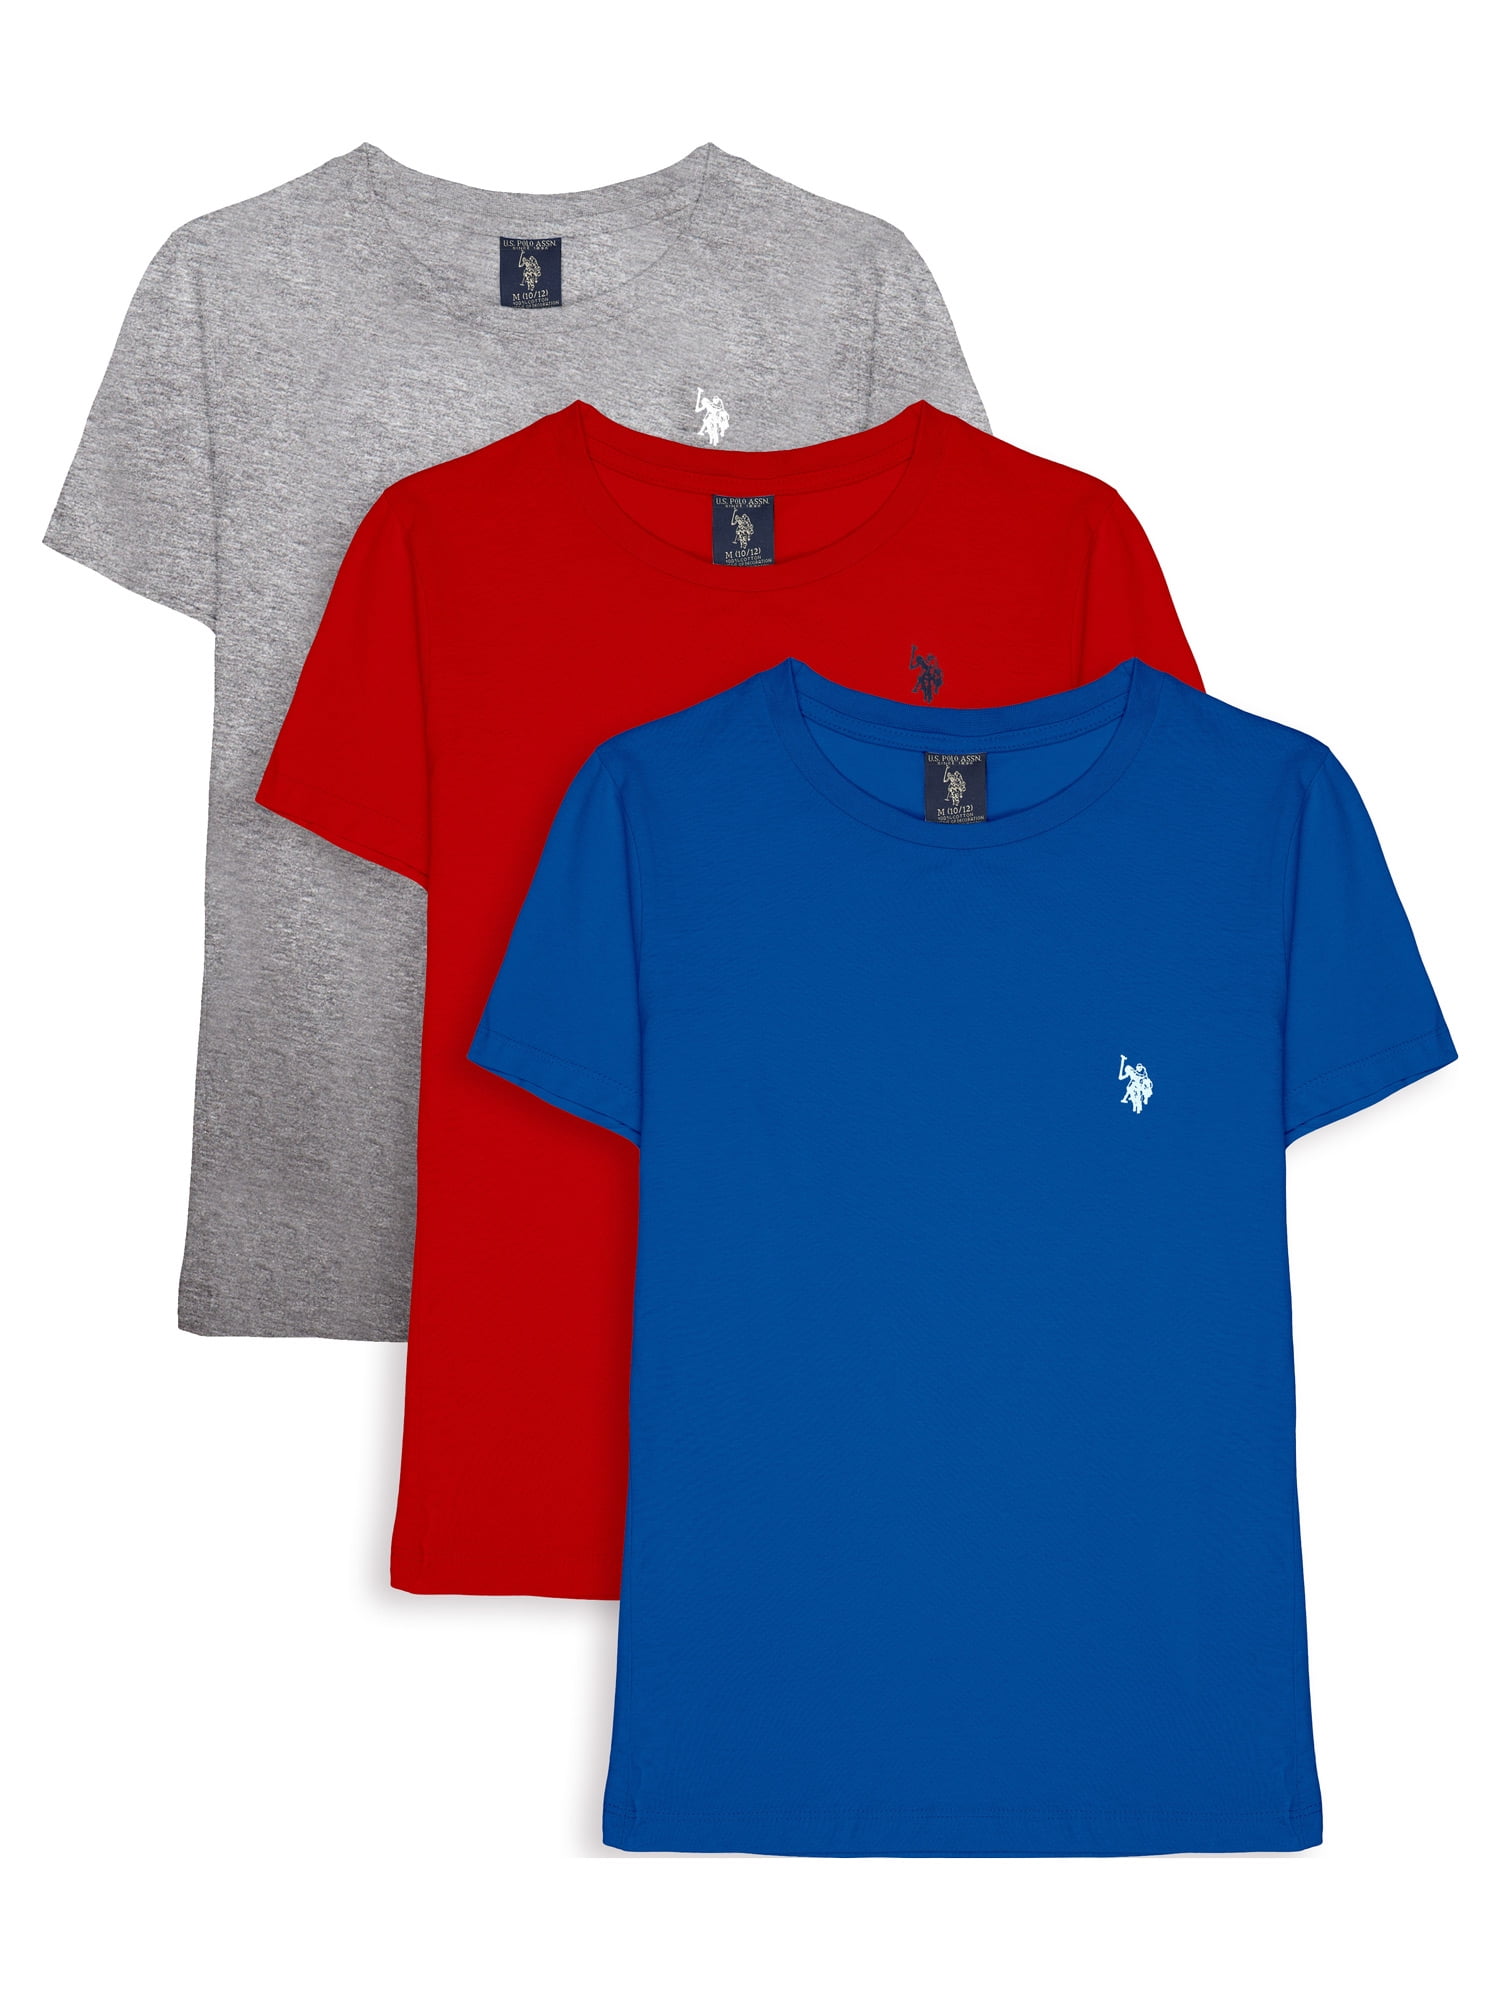 US Polo Assn Kids Boys T Shirt Crew Neck Tee Top Short Sleeve Cotton Print 